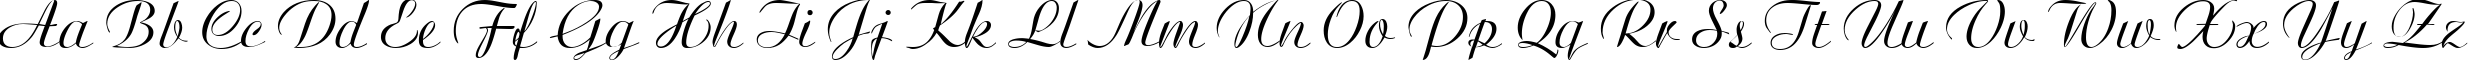 Пример написания английского алфавита шрифтом Ariston Normal